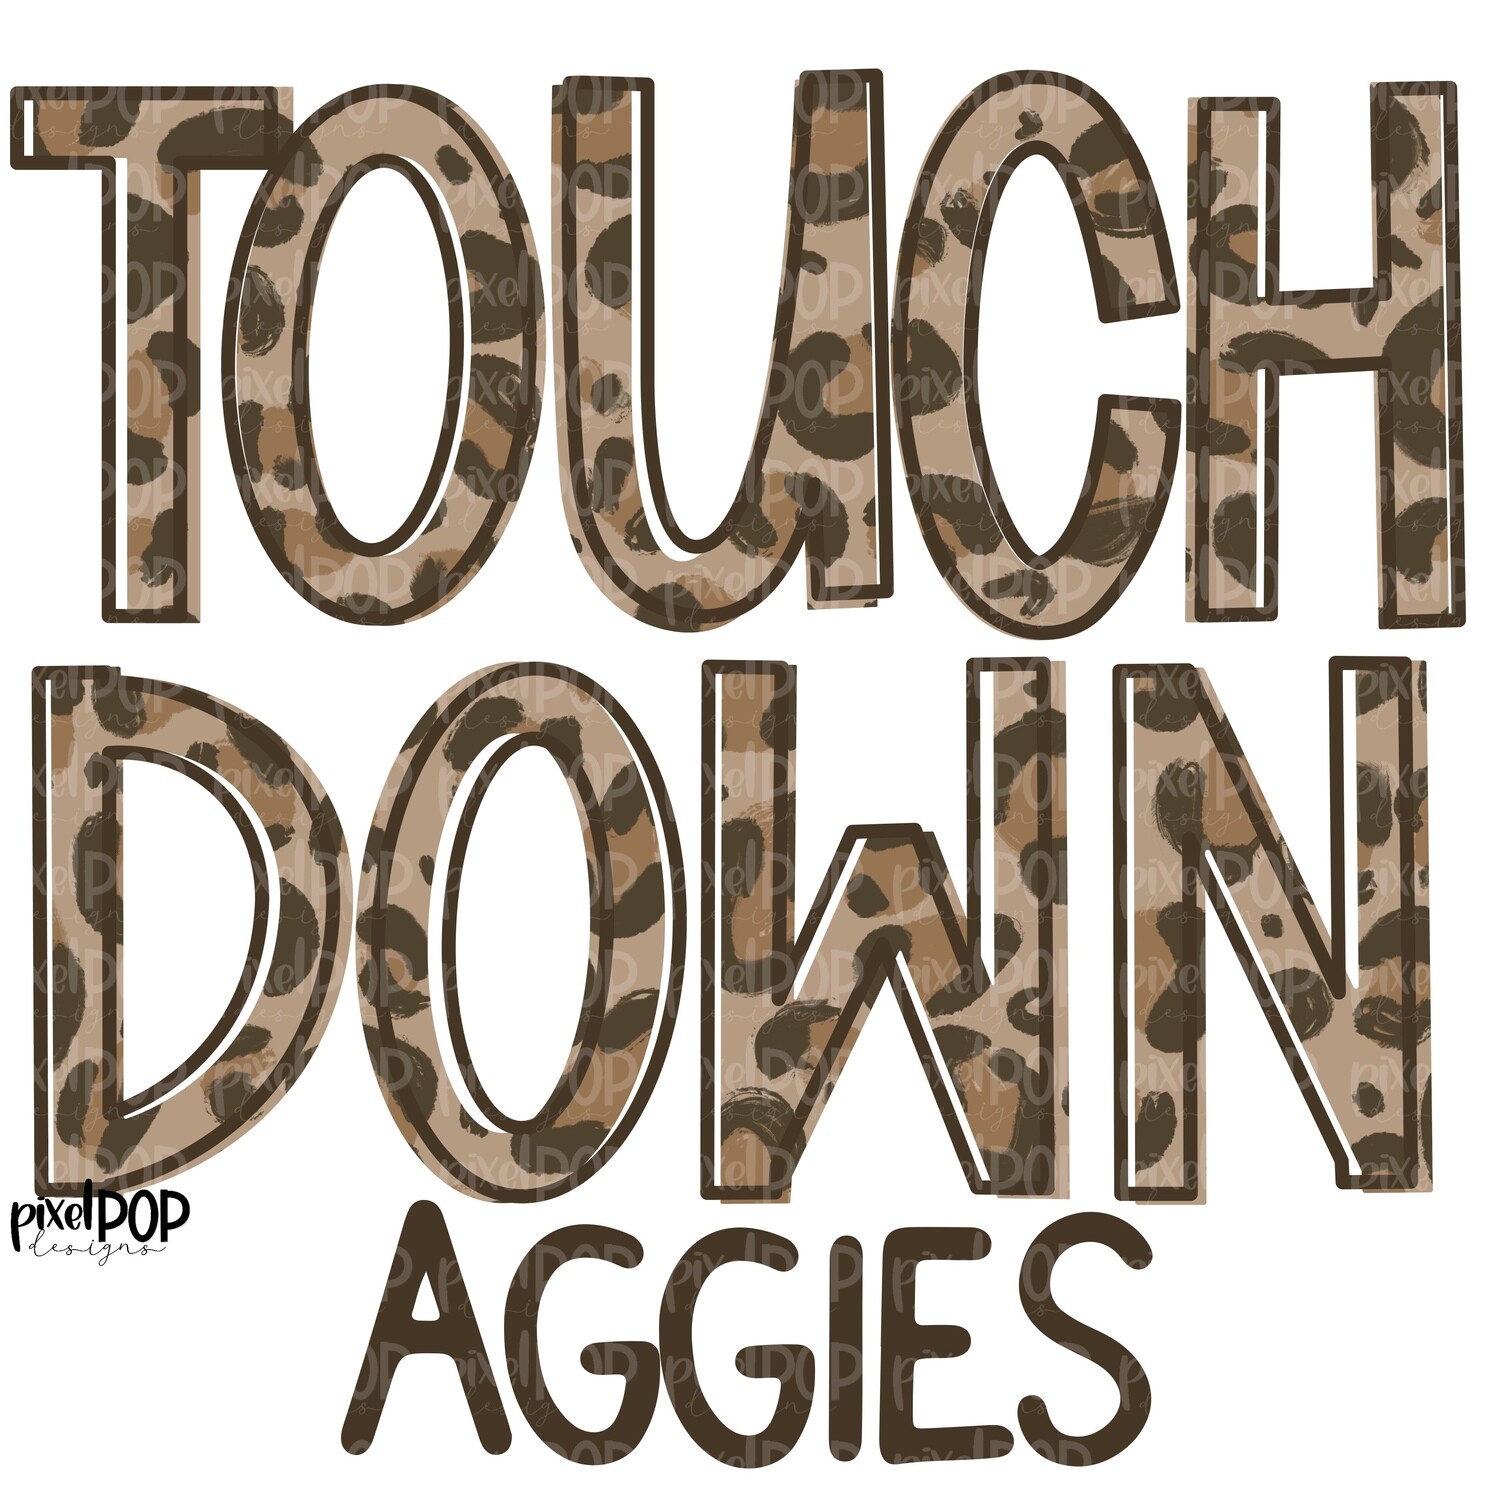 Aggies Touchdown Leopard Print Mascot PNG | Aggies Sublimation Design | Team Spirit Design | Cats Clip Art | Digital Download | Printable Artwork | Sports Art